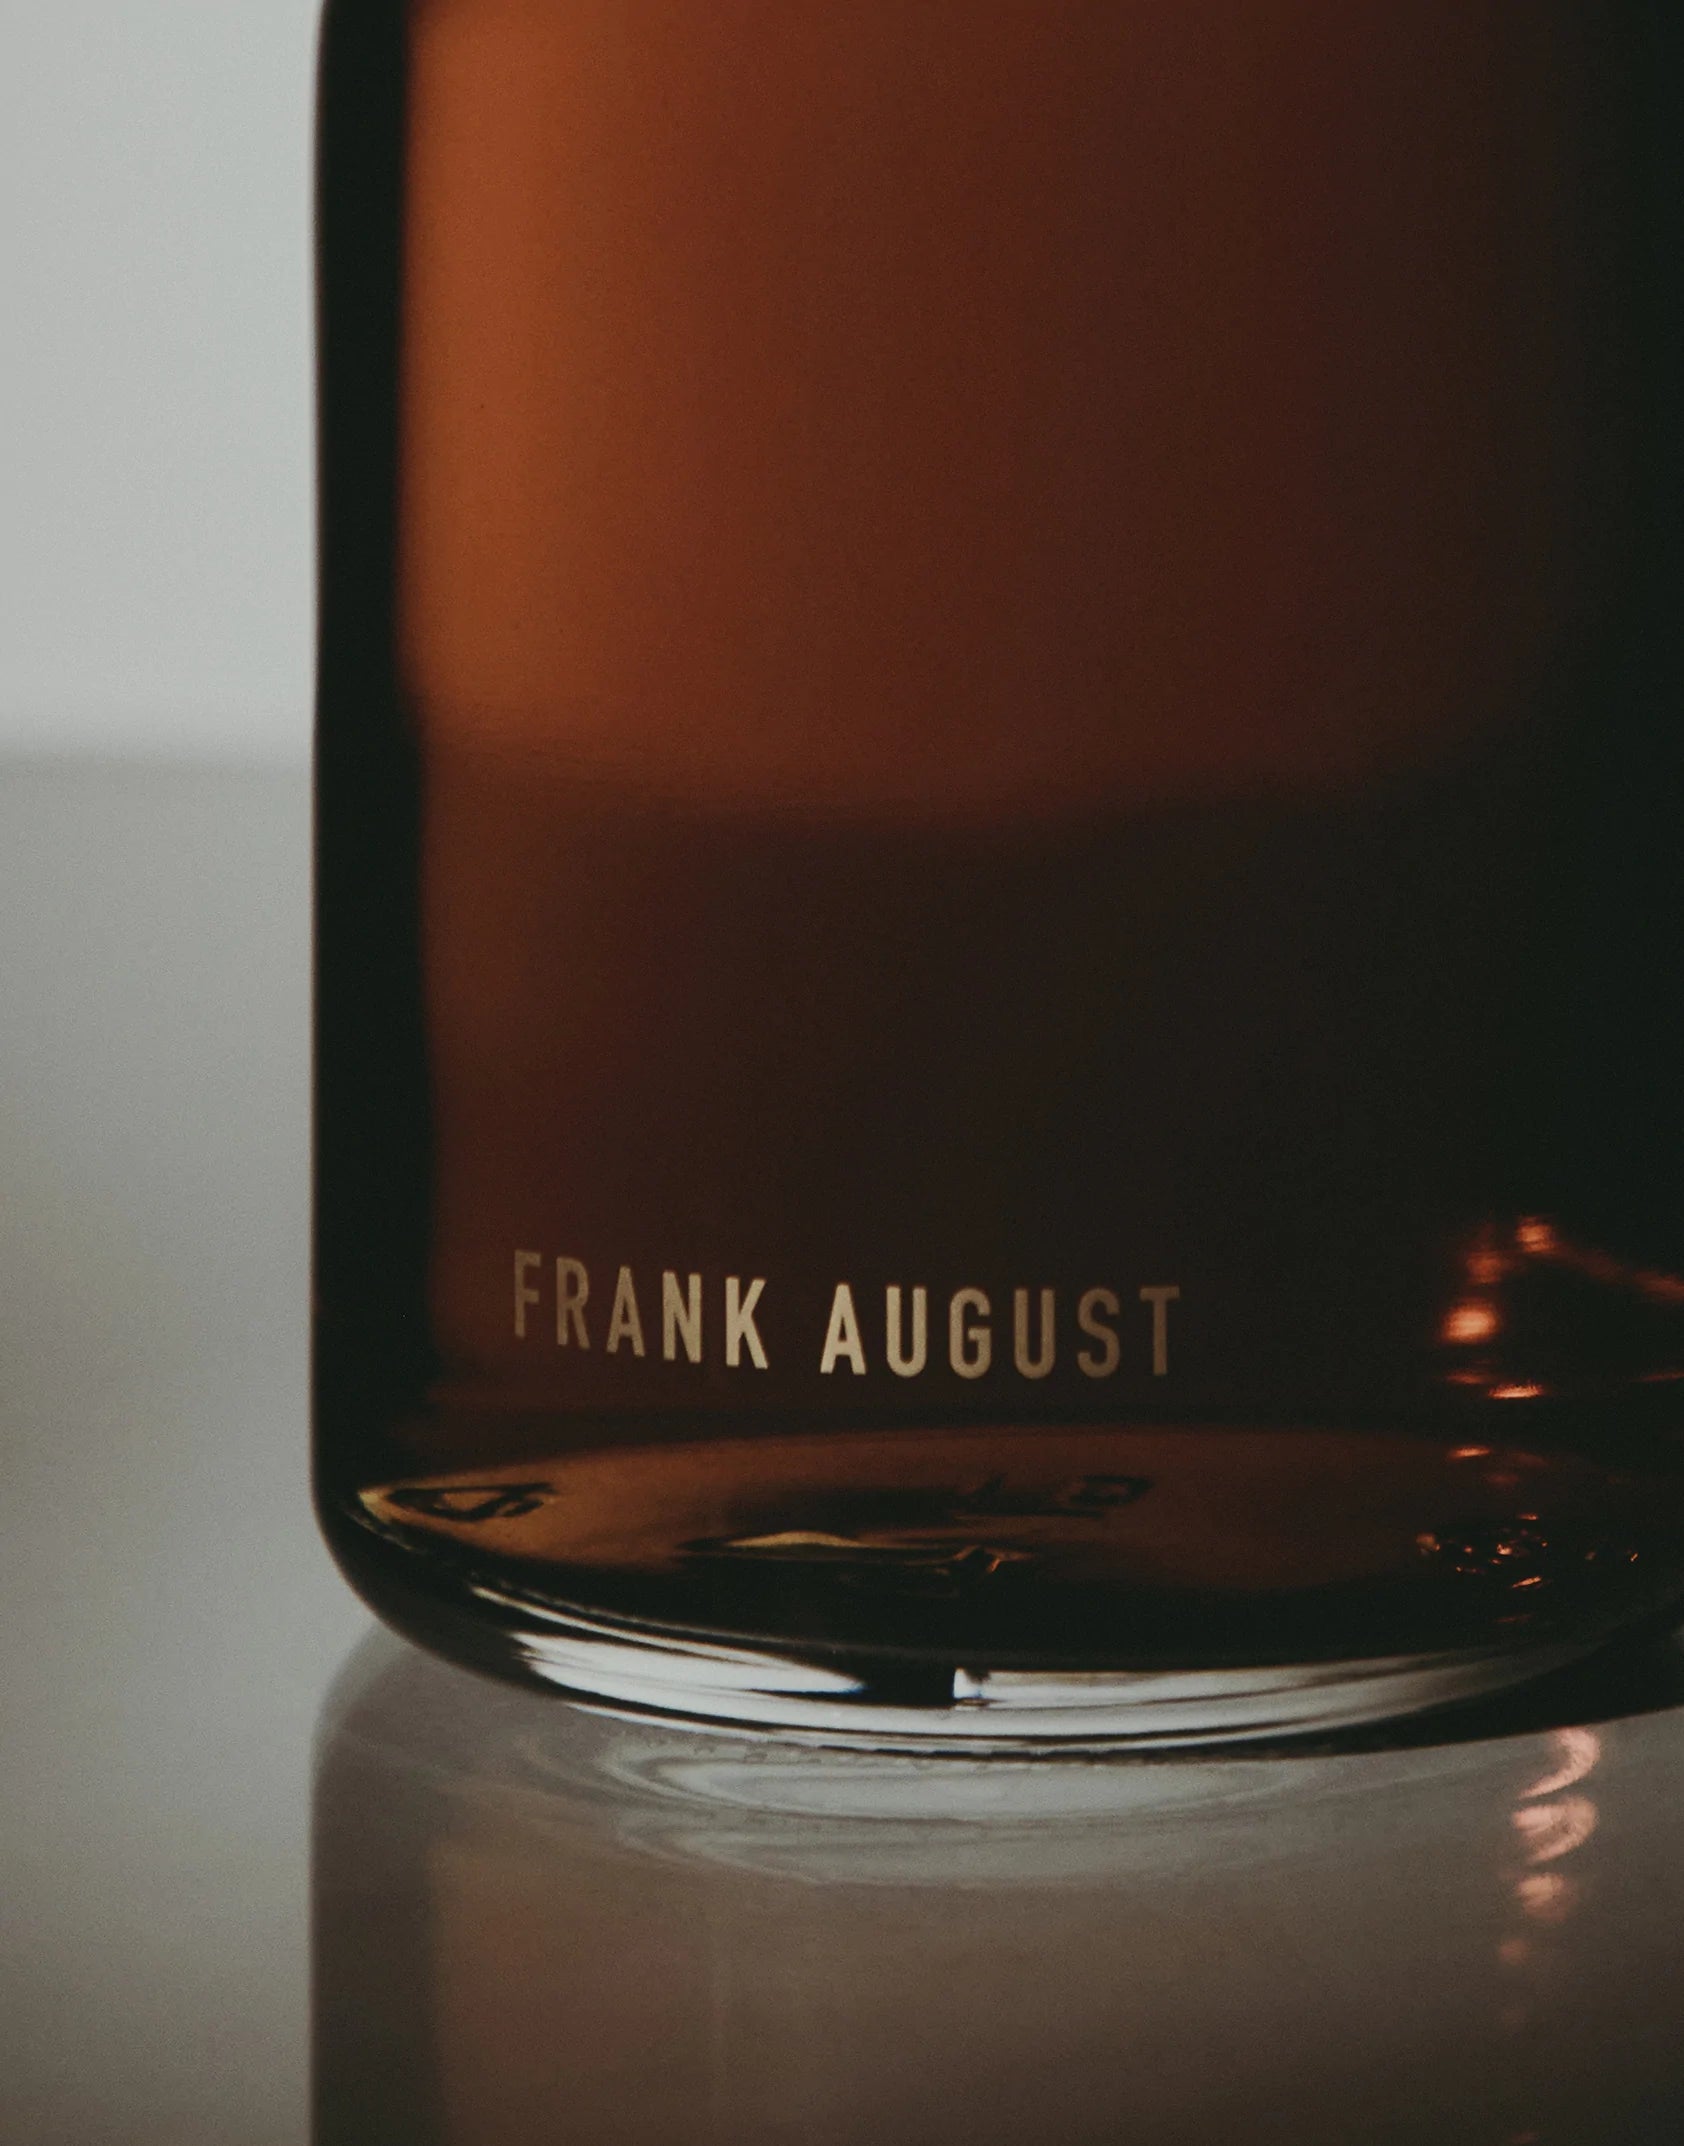 Frank August Small Batch Kentucky Whiskey